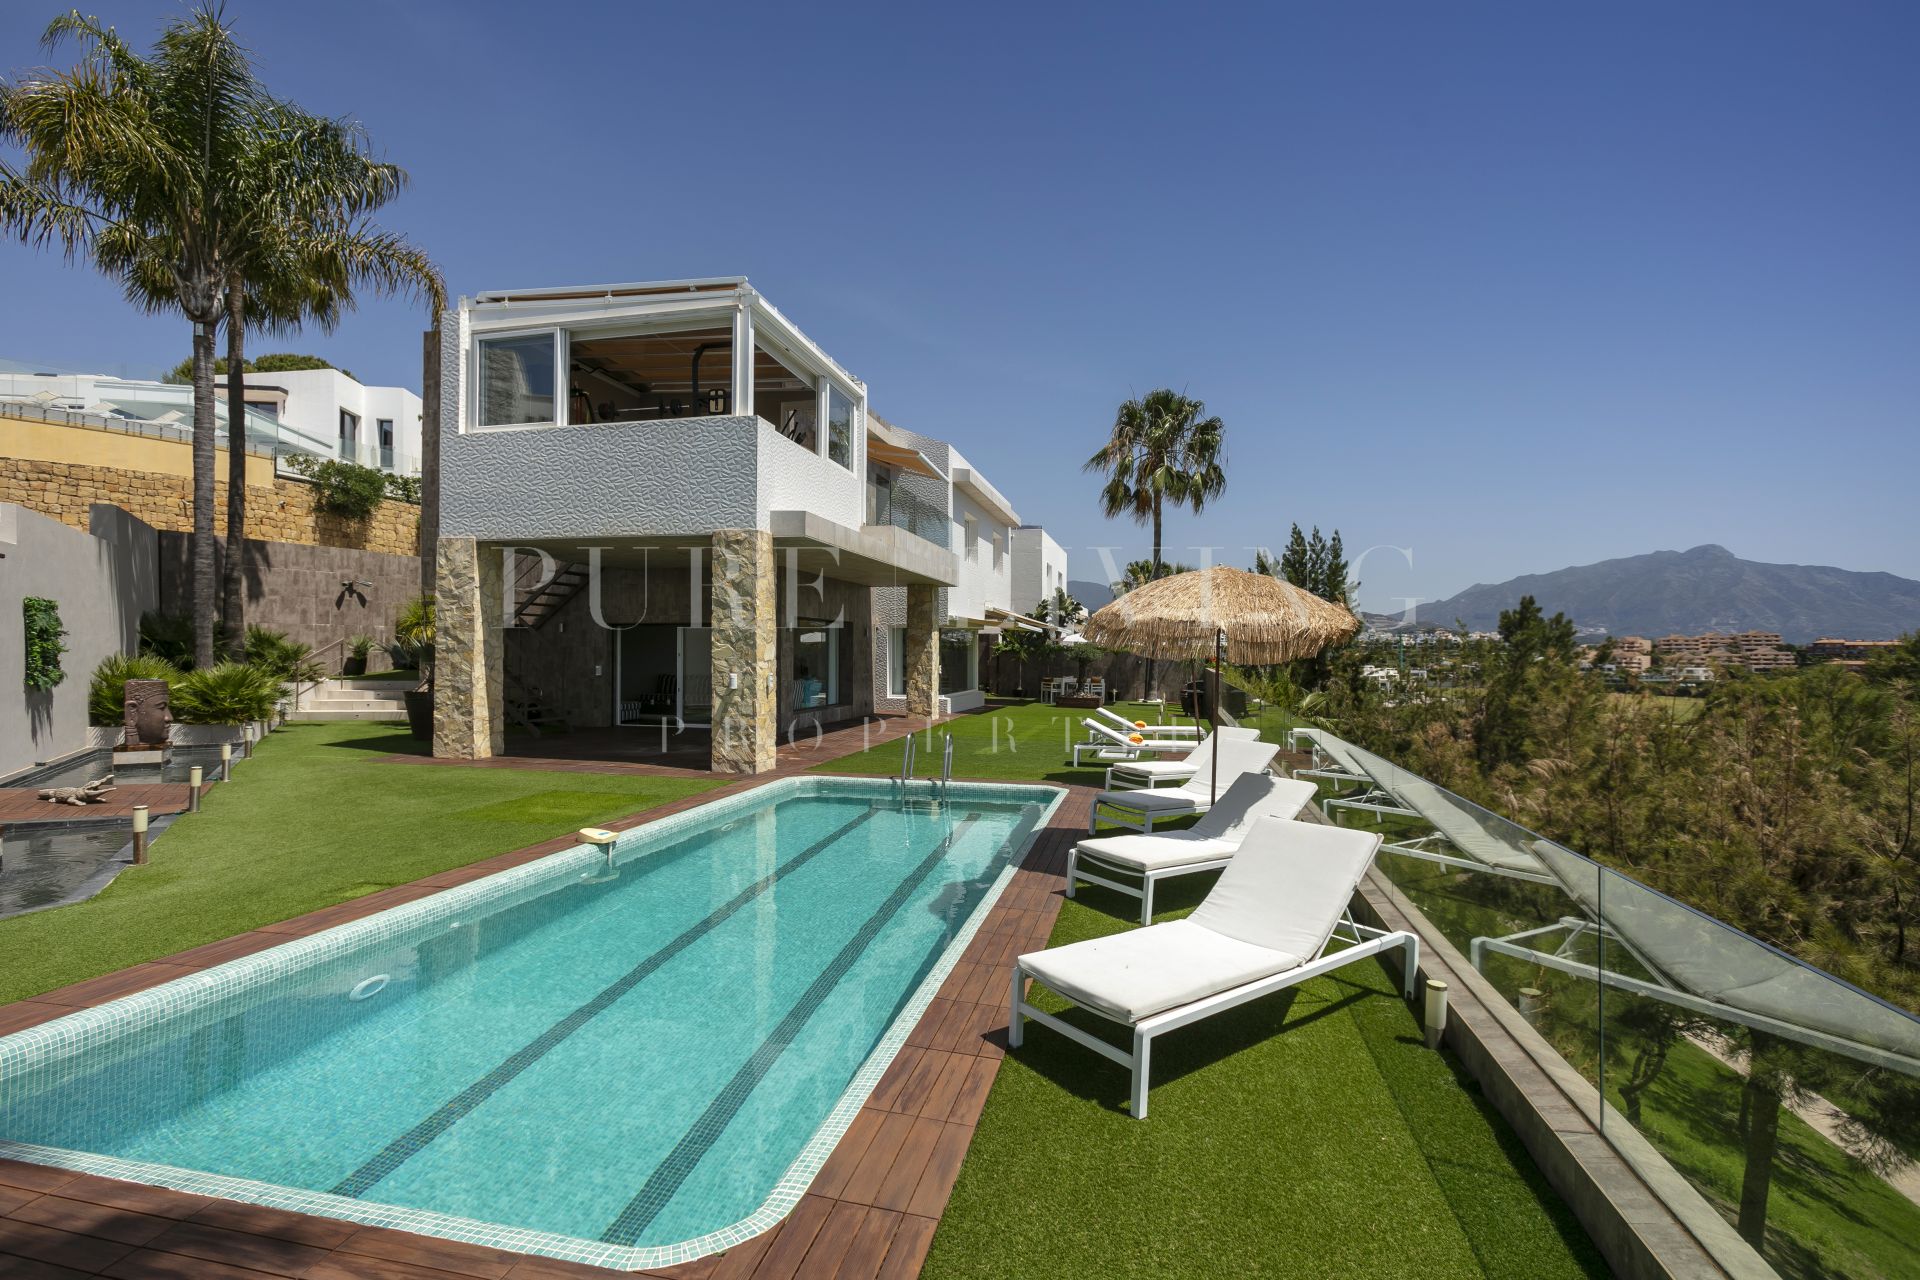 Superb four bedroom frontline golf villa for sale with panoramic views in La Alqueria, Benahavis